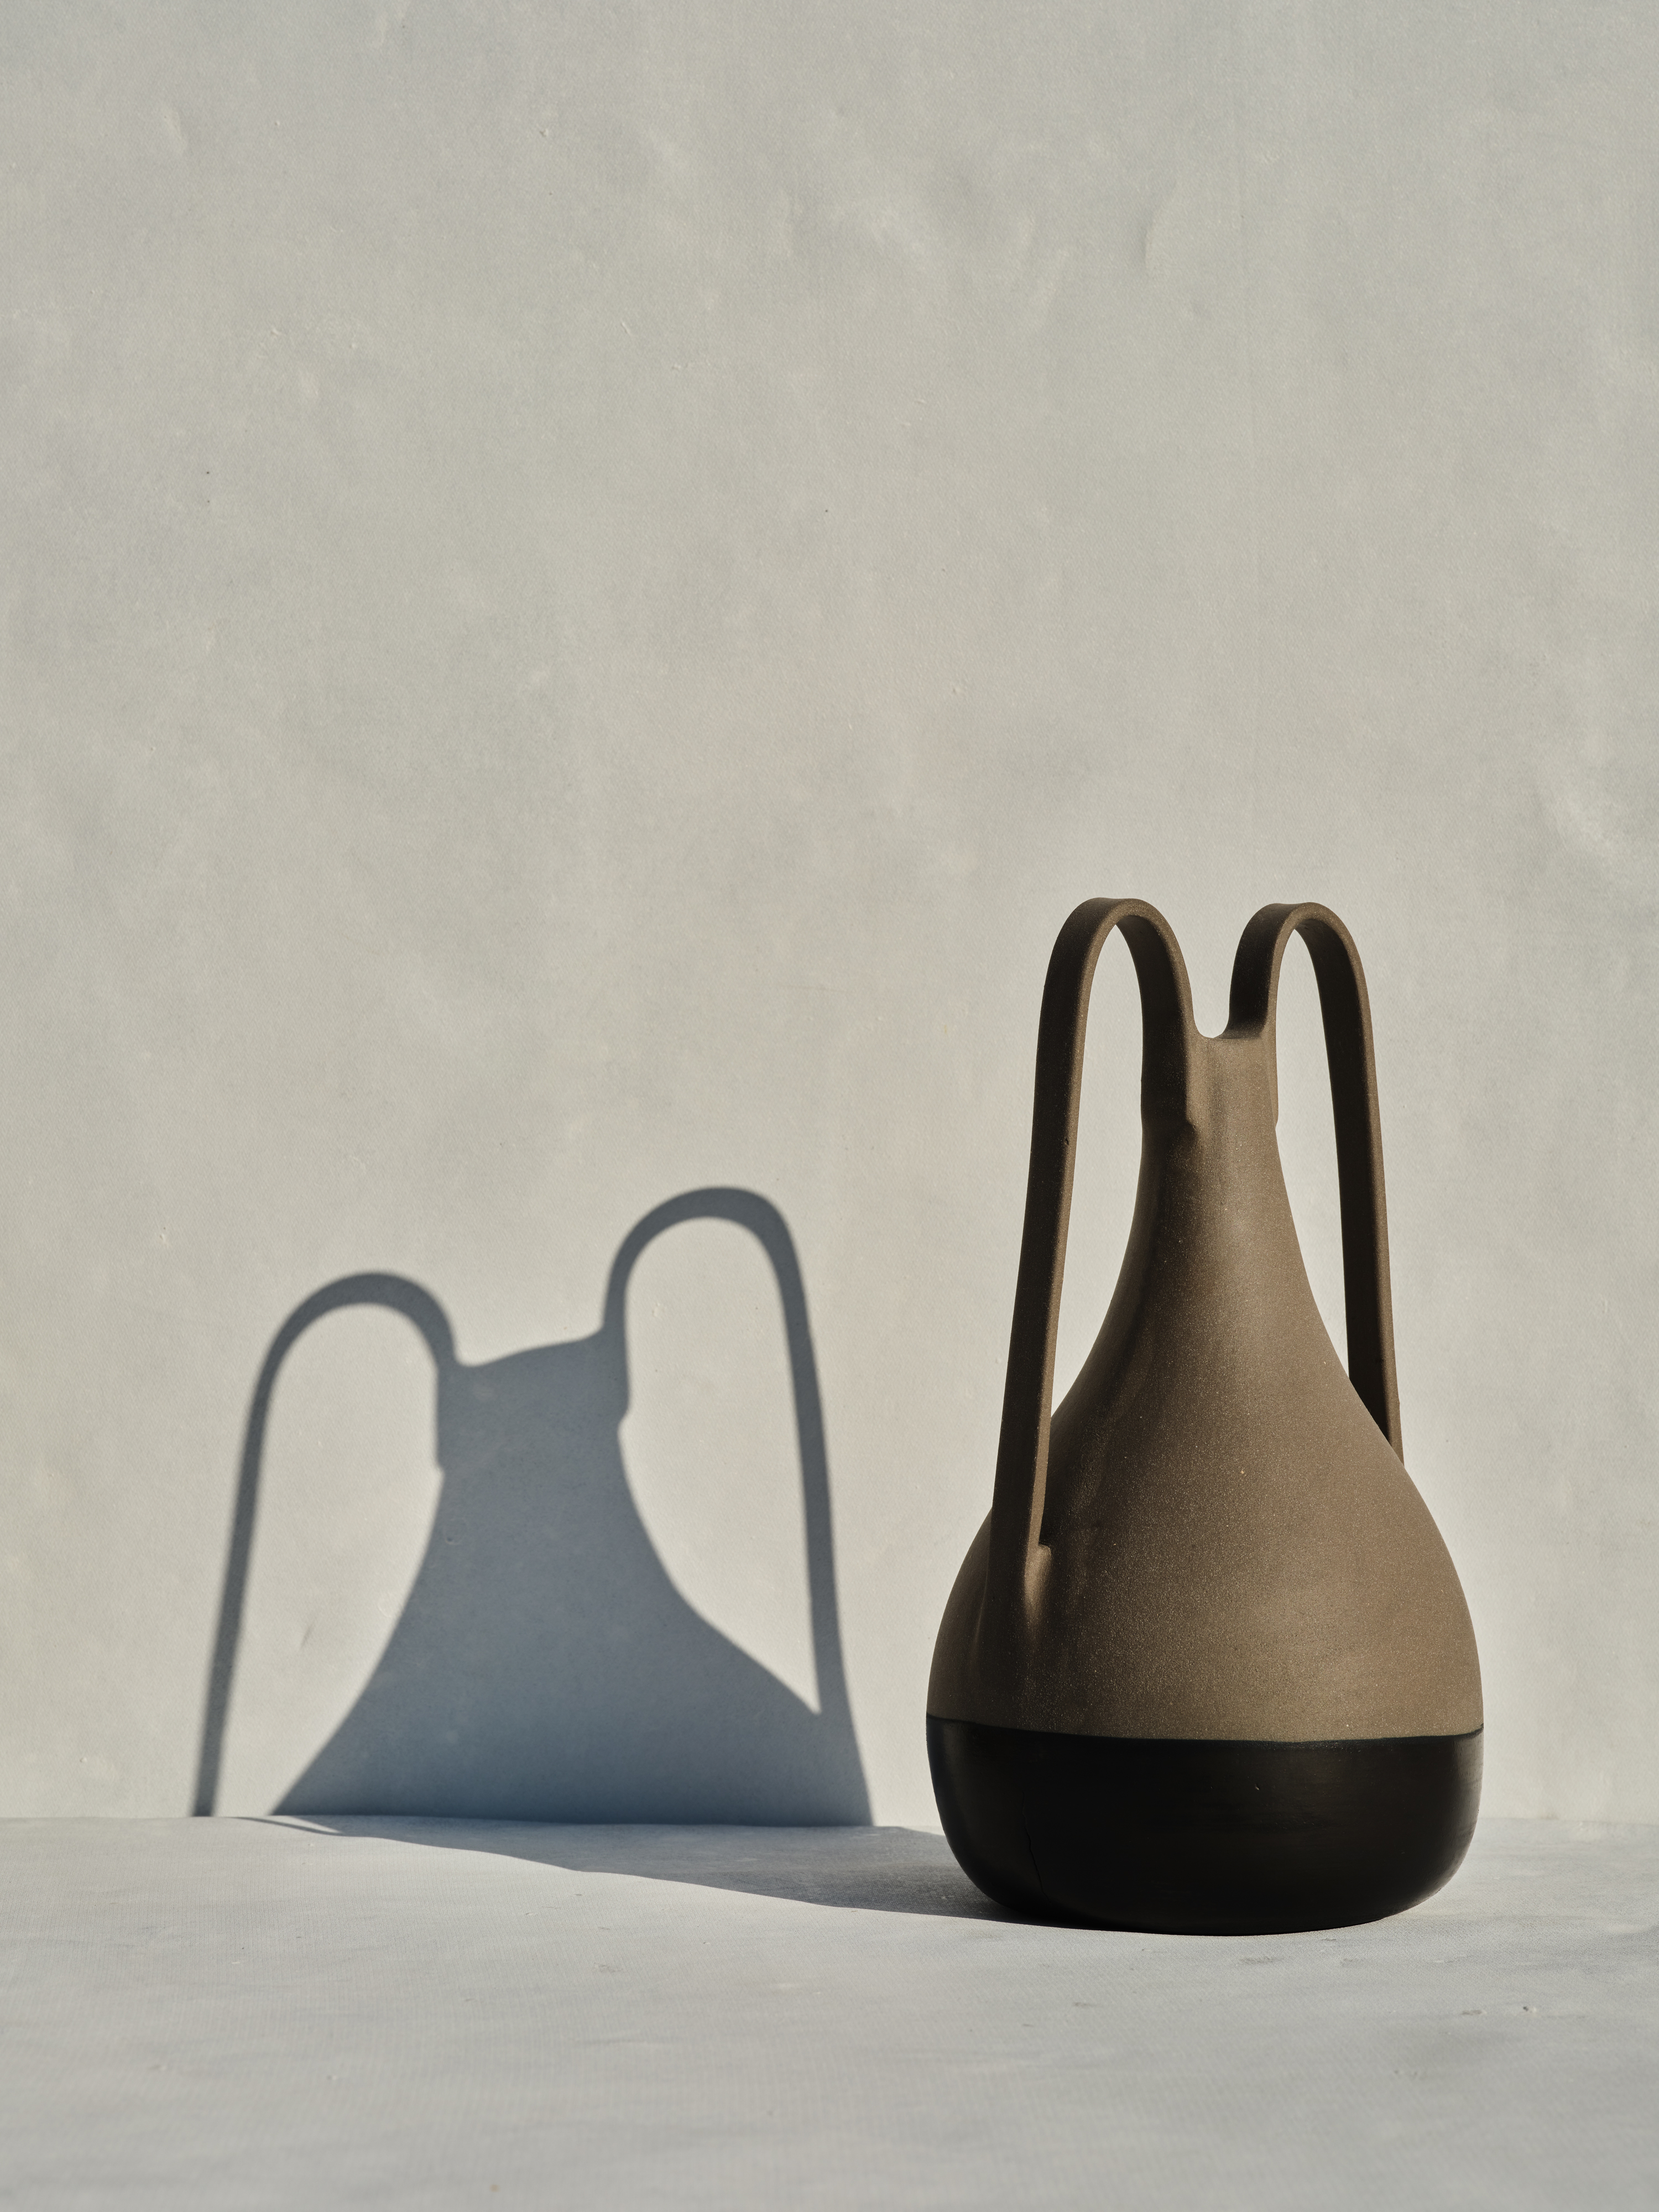 PYTHOS - Black/grey ceramic vase with two handles